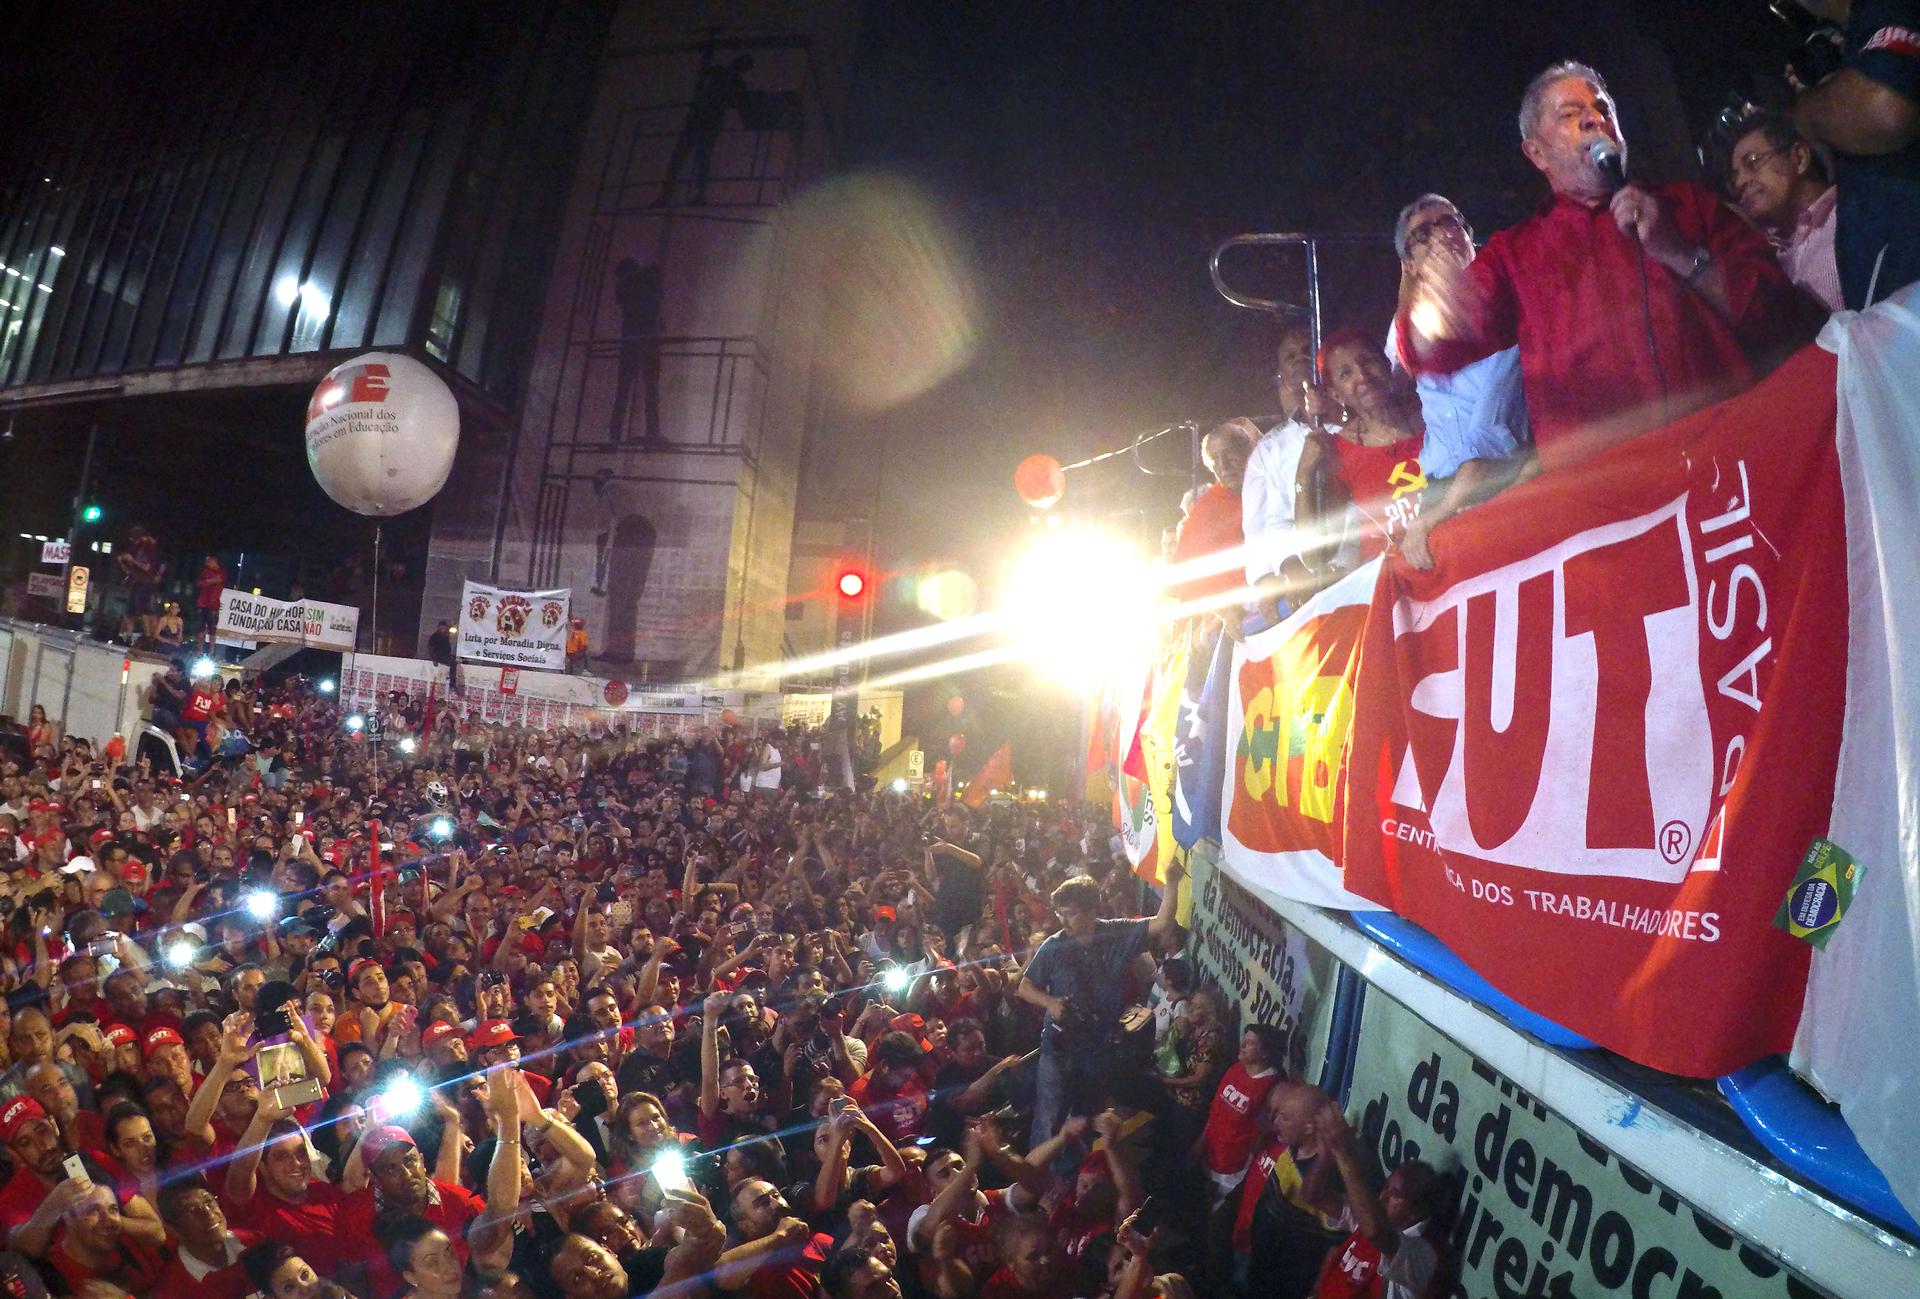 Lula on the side, on raised platform speaking in microphone with crowd below